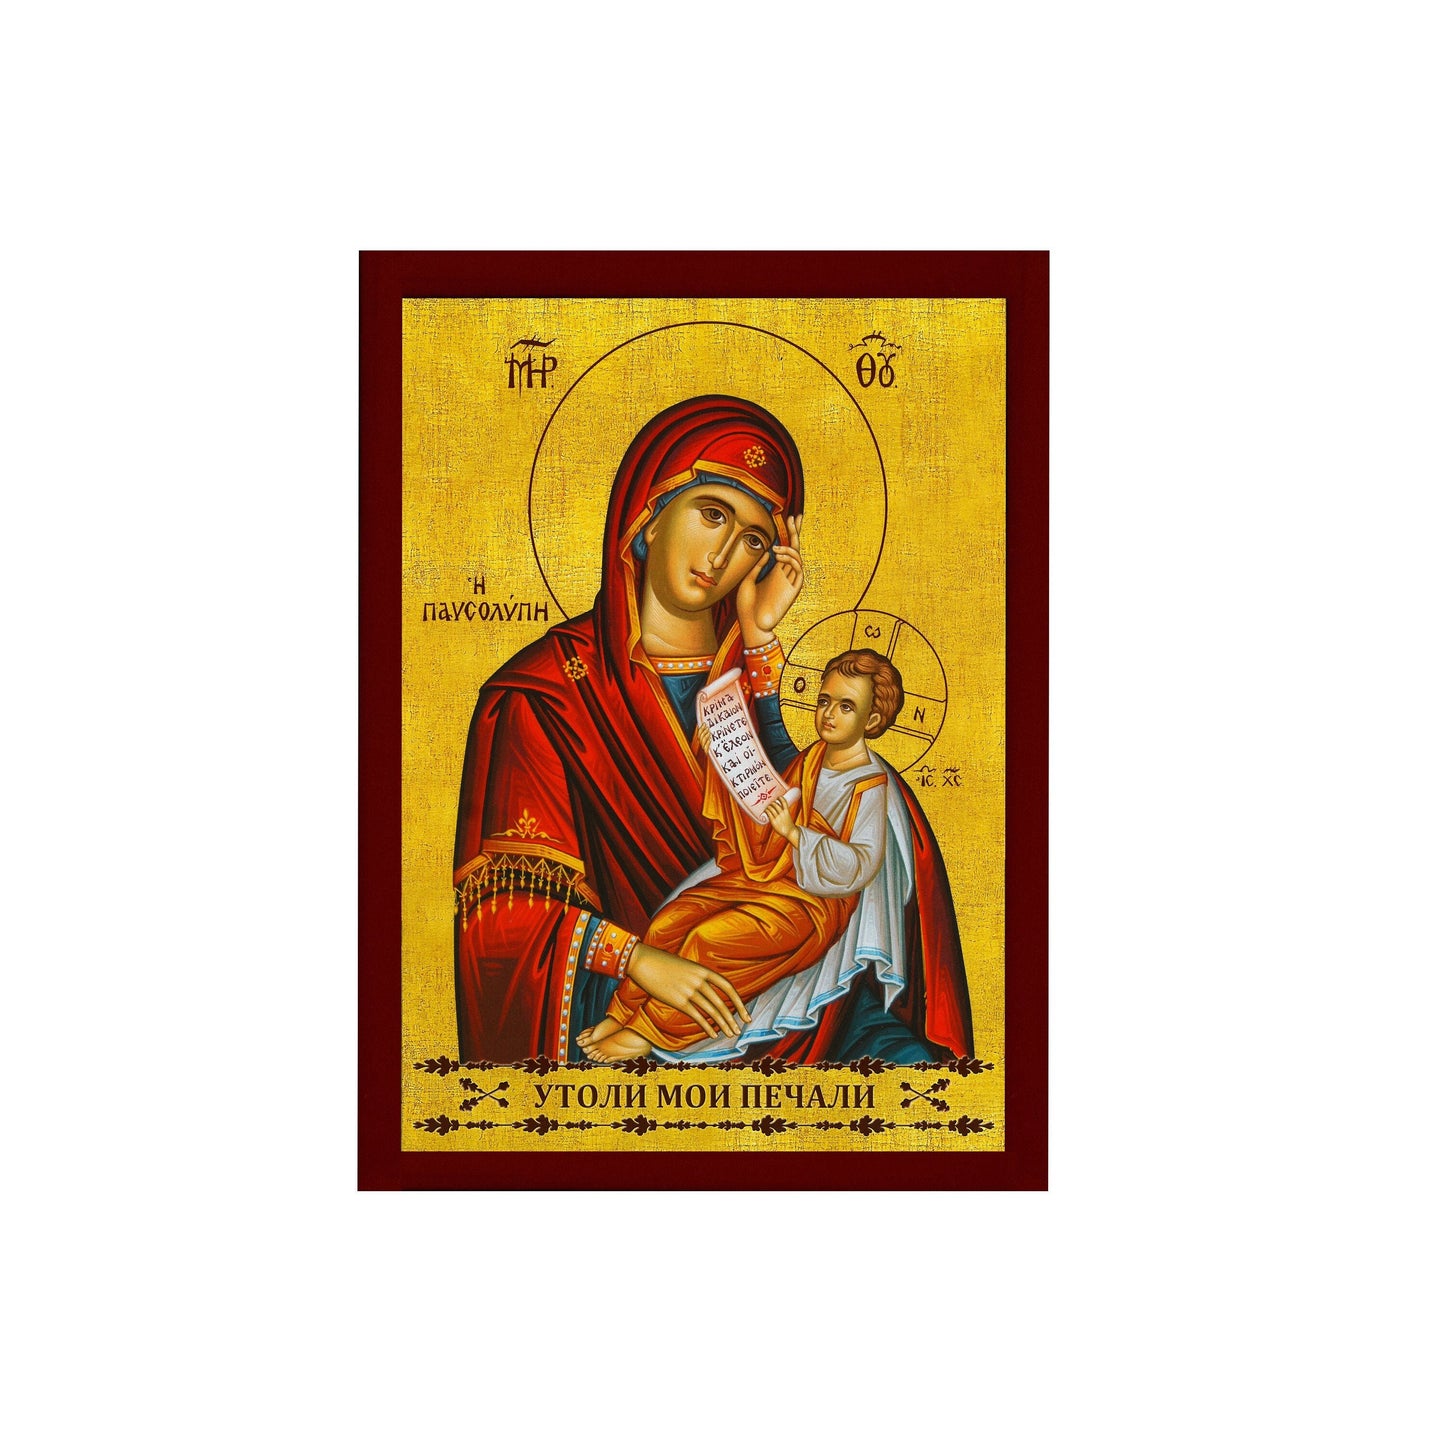 Virgin Mary icon Panagia Pausolipi, Greek Christian Orthodox Icon, Mother of God Byzantine art, Theotokos handmade wall hanging wood plaque TheHolyArt